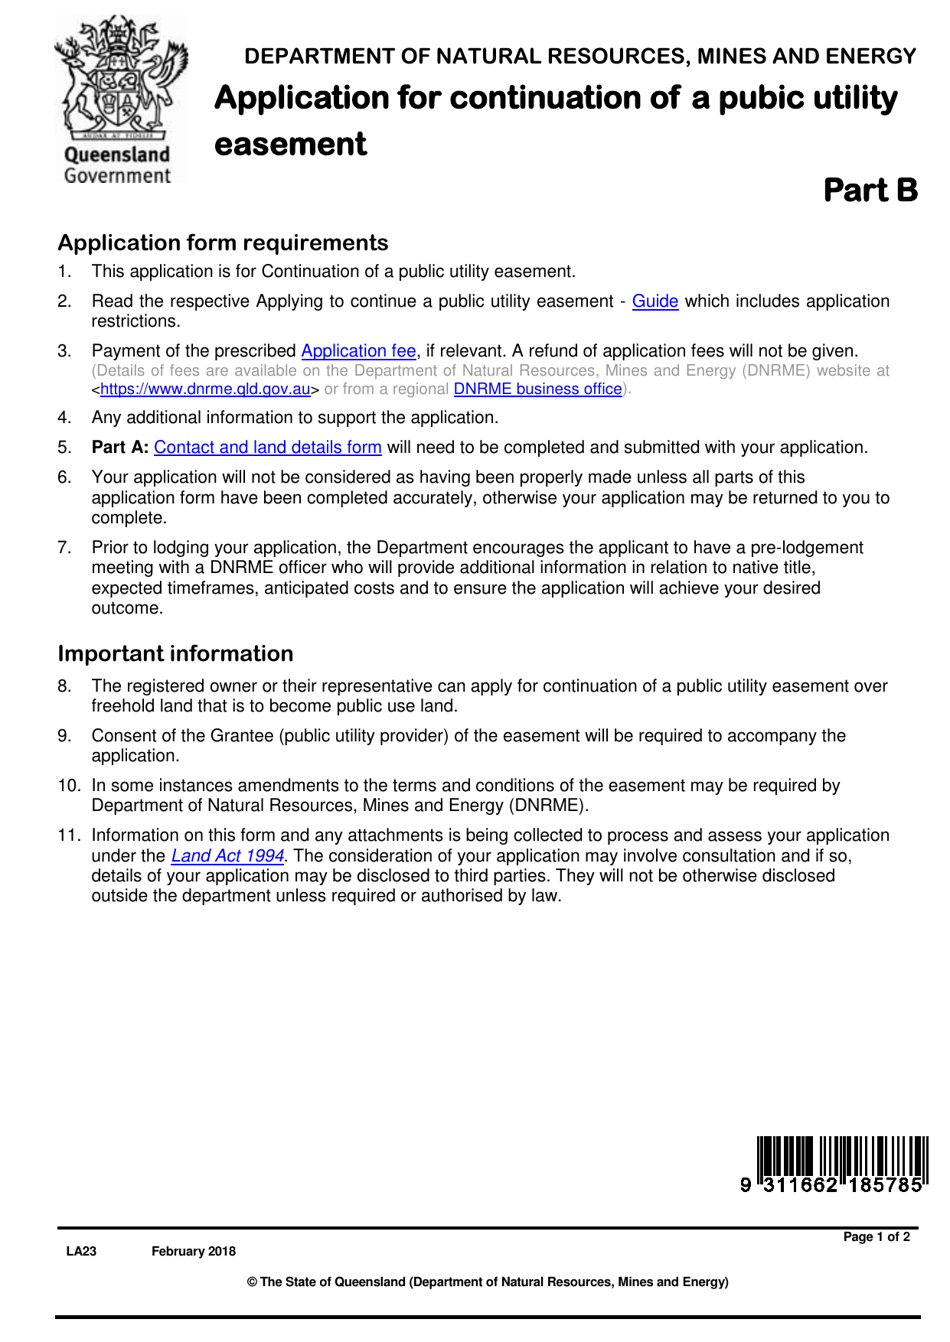 Form LA23 Part B Application for Continuation of a Public Utility Easement - Queensland, Australia, Page 1